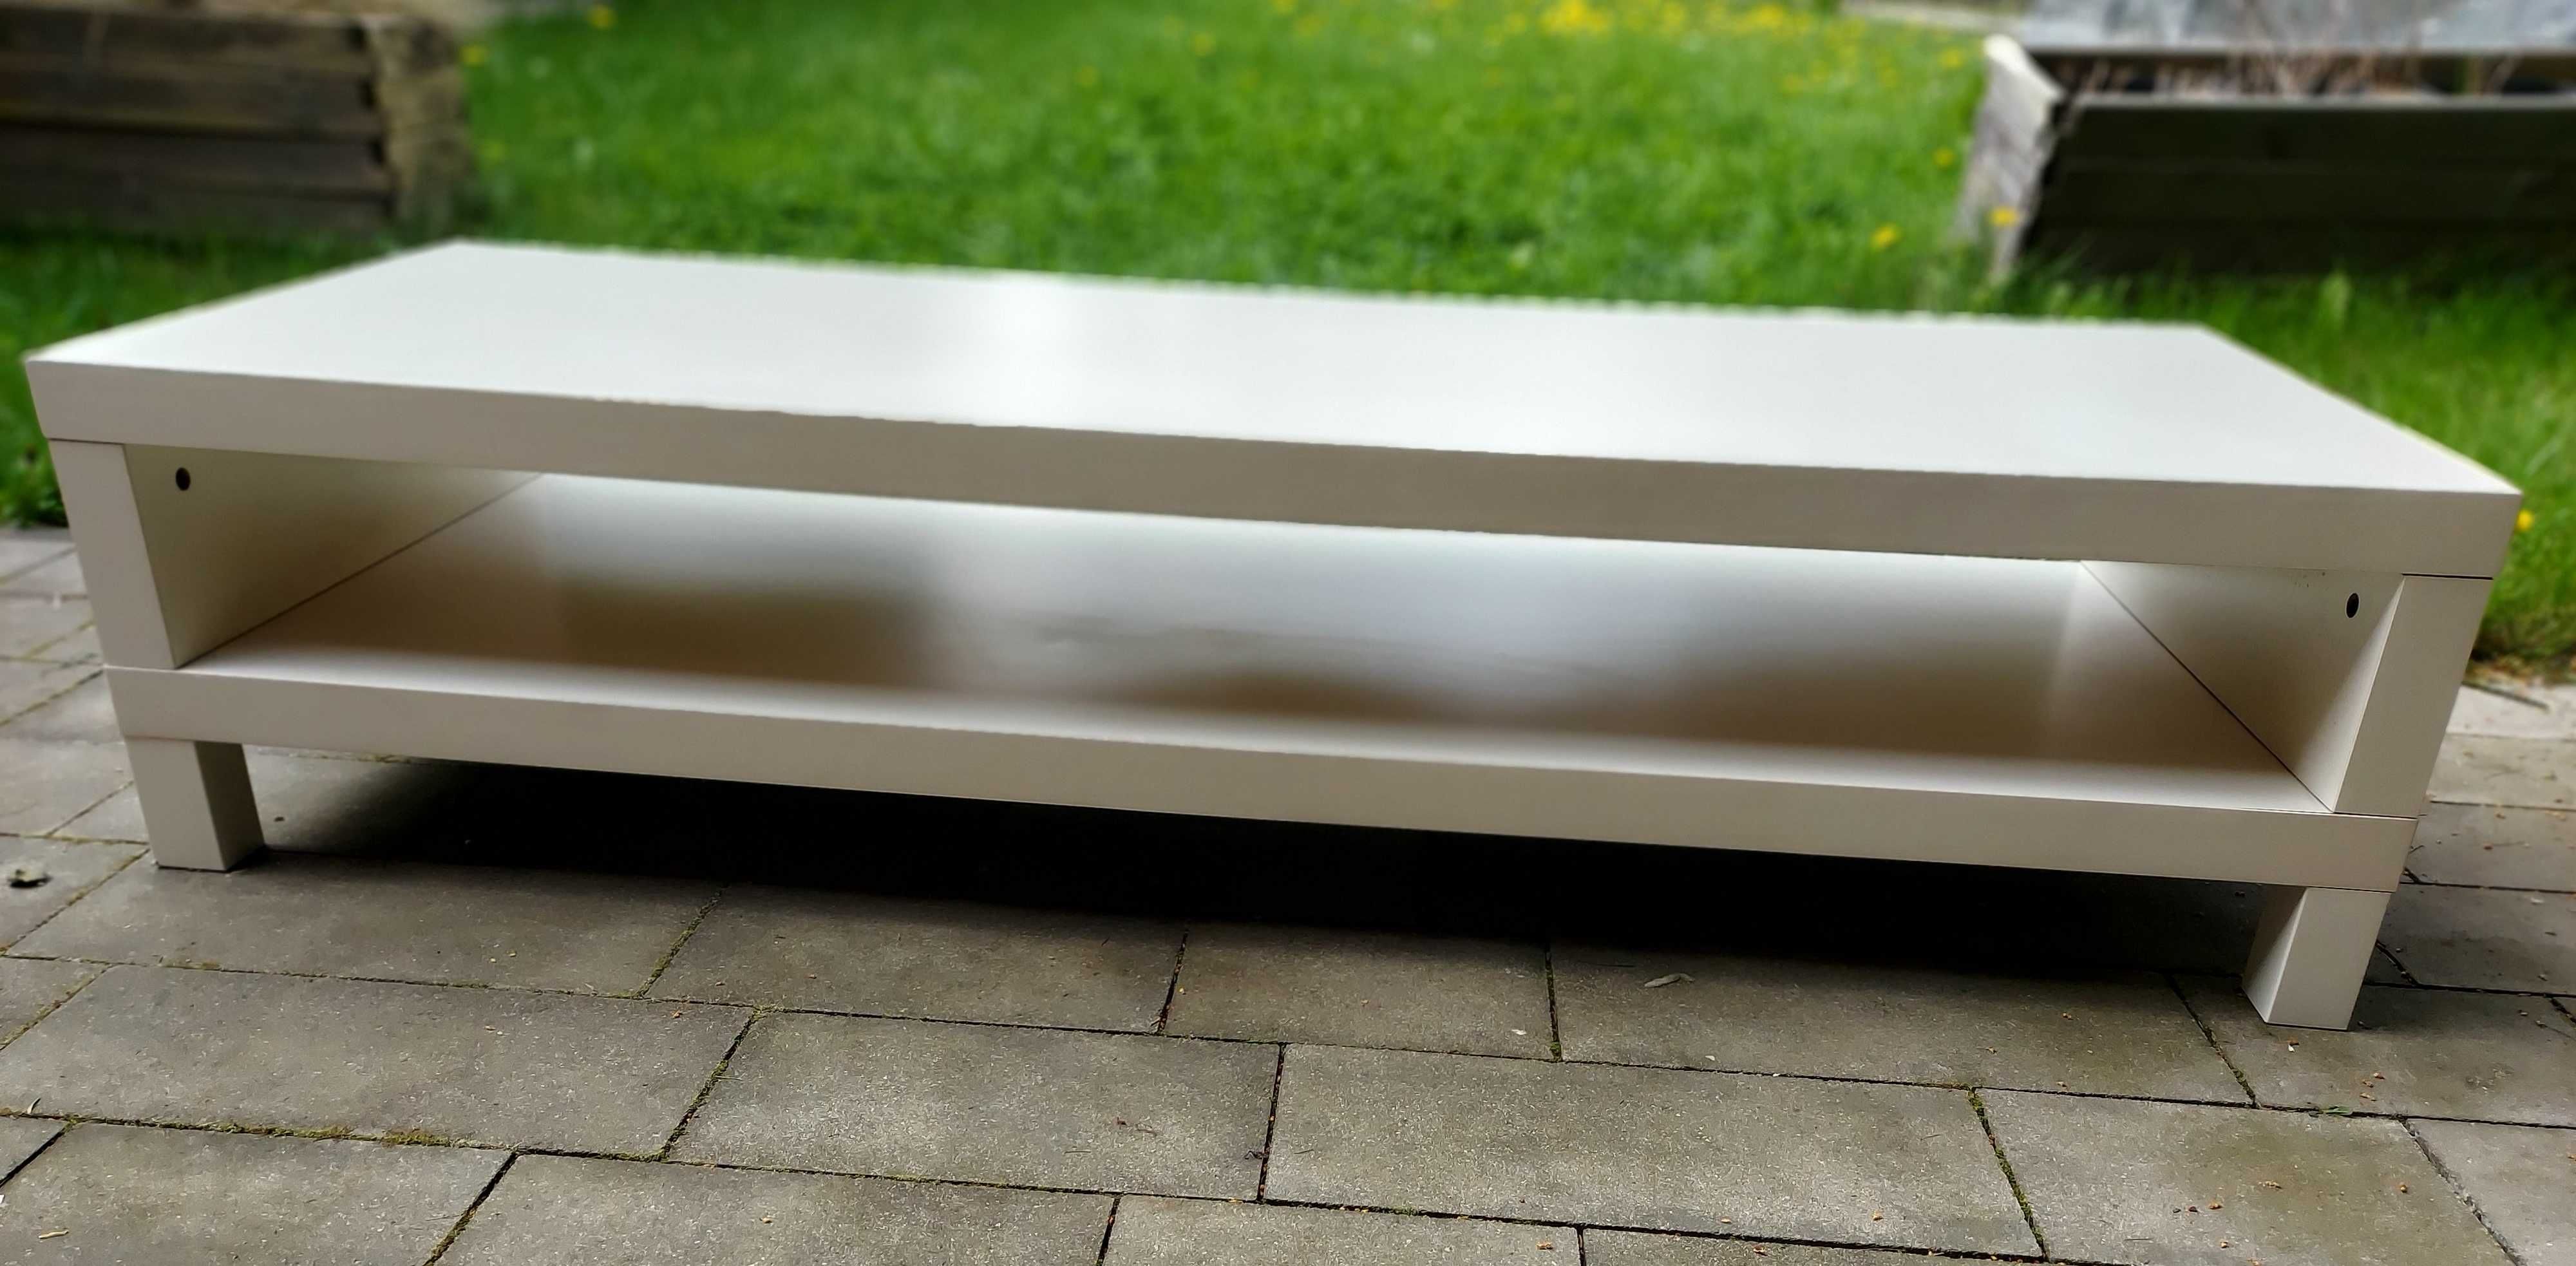 Biała długa szafka półka stolik pod telewizor RTV 149x55x35 cm Ikea